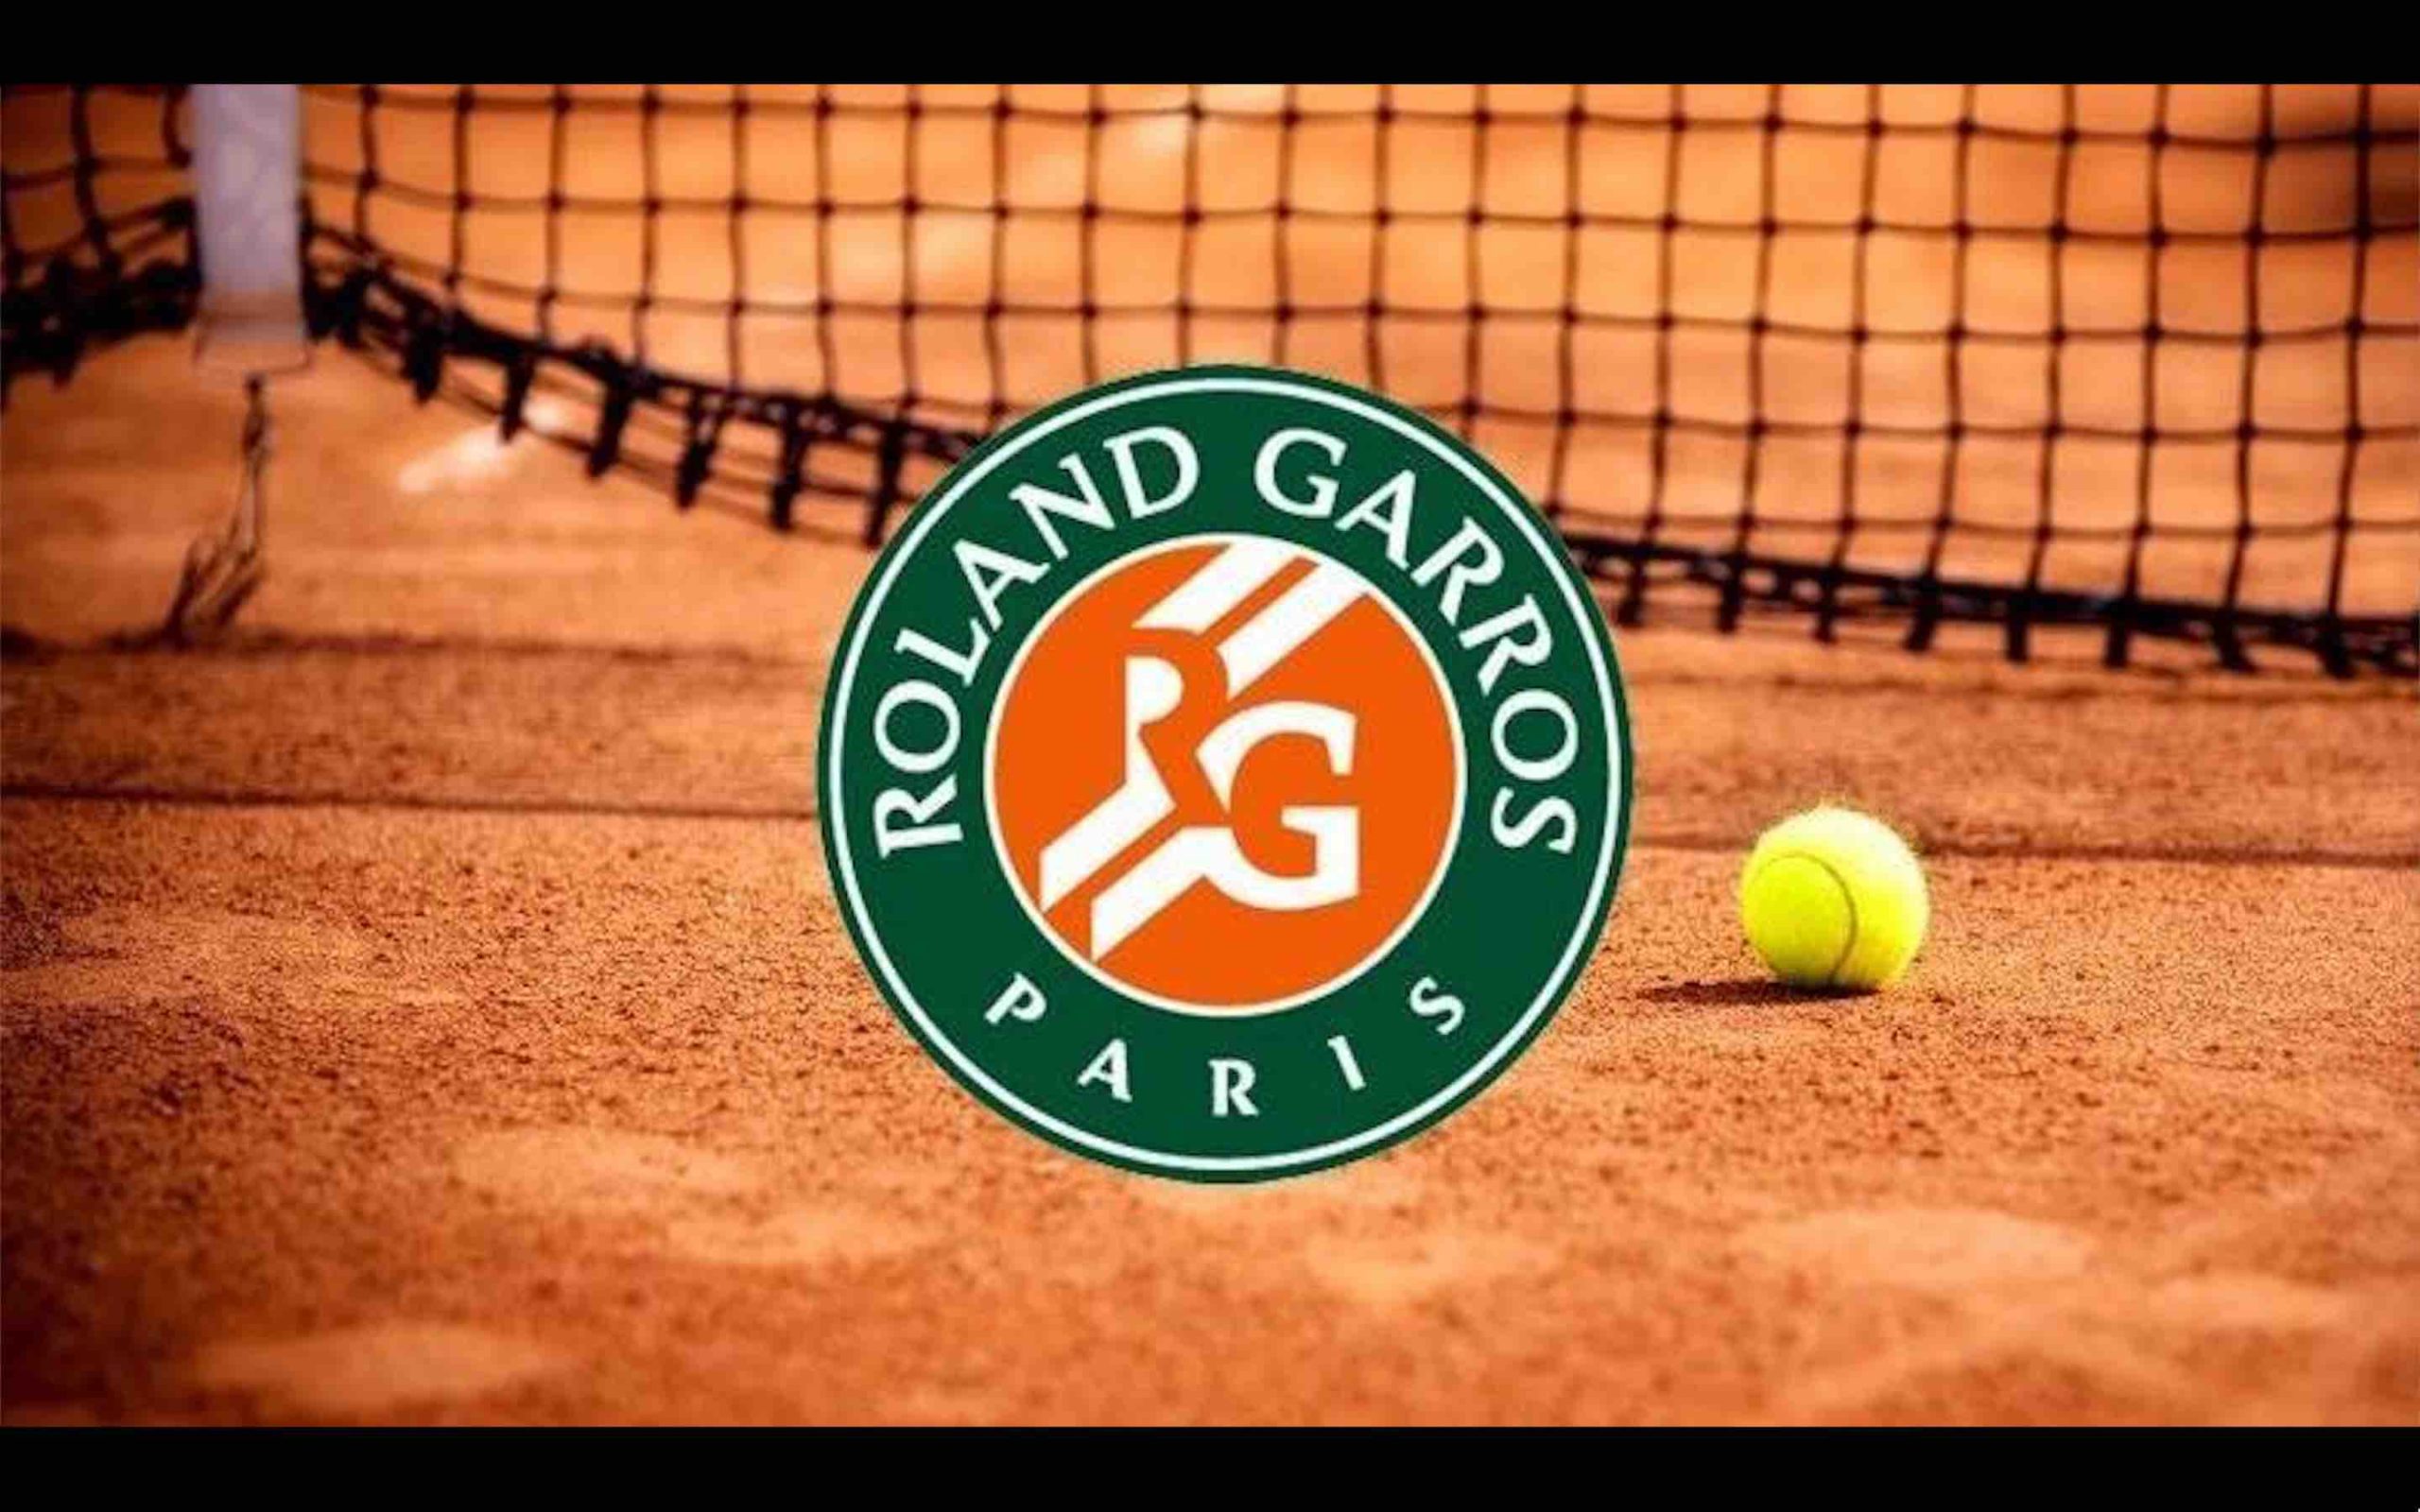 Roland-Garros Paris France